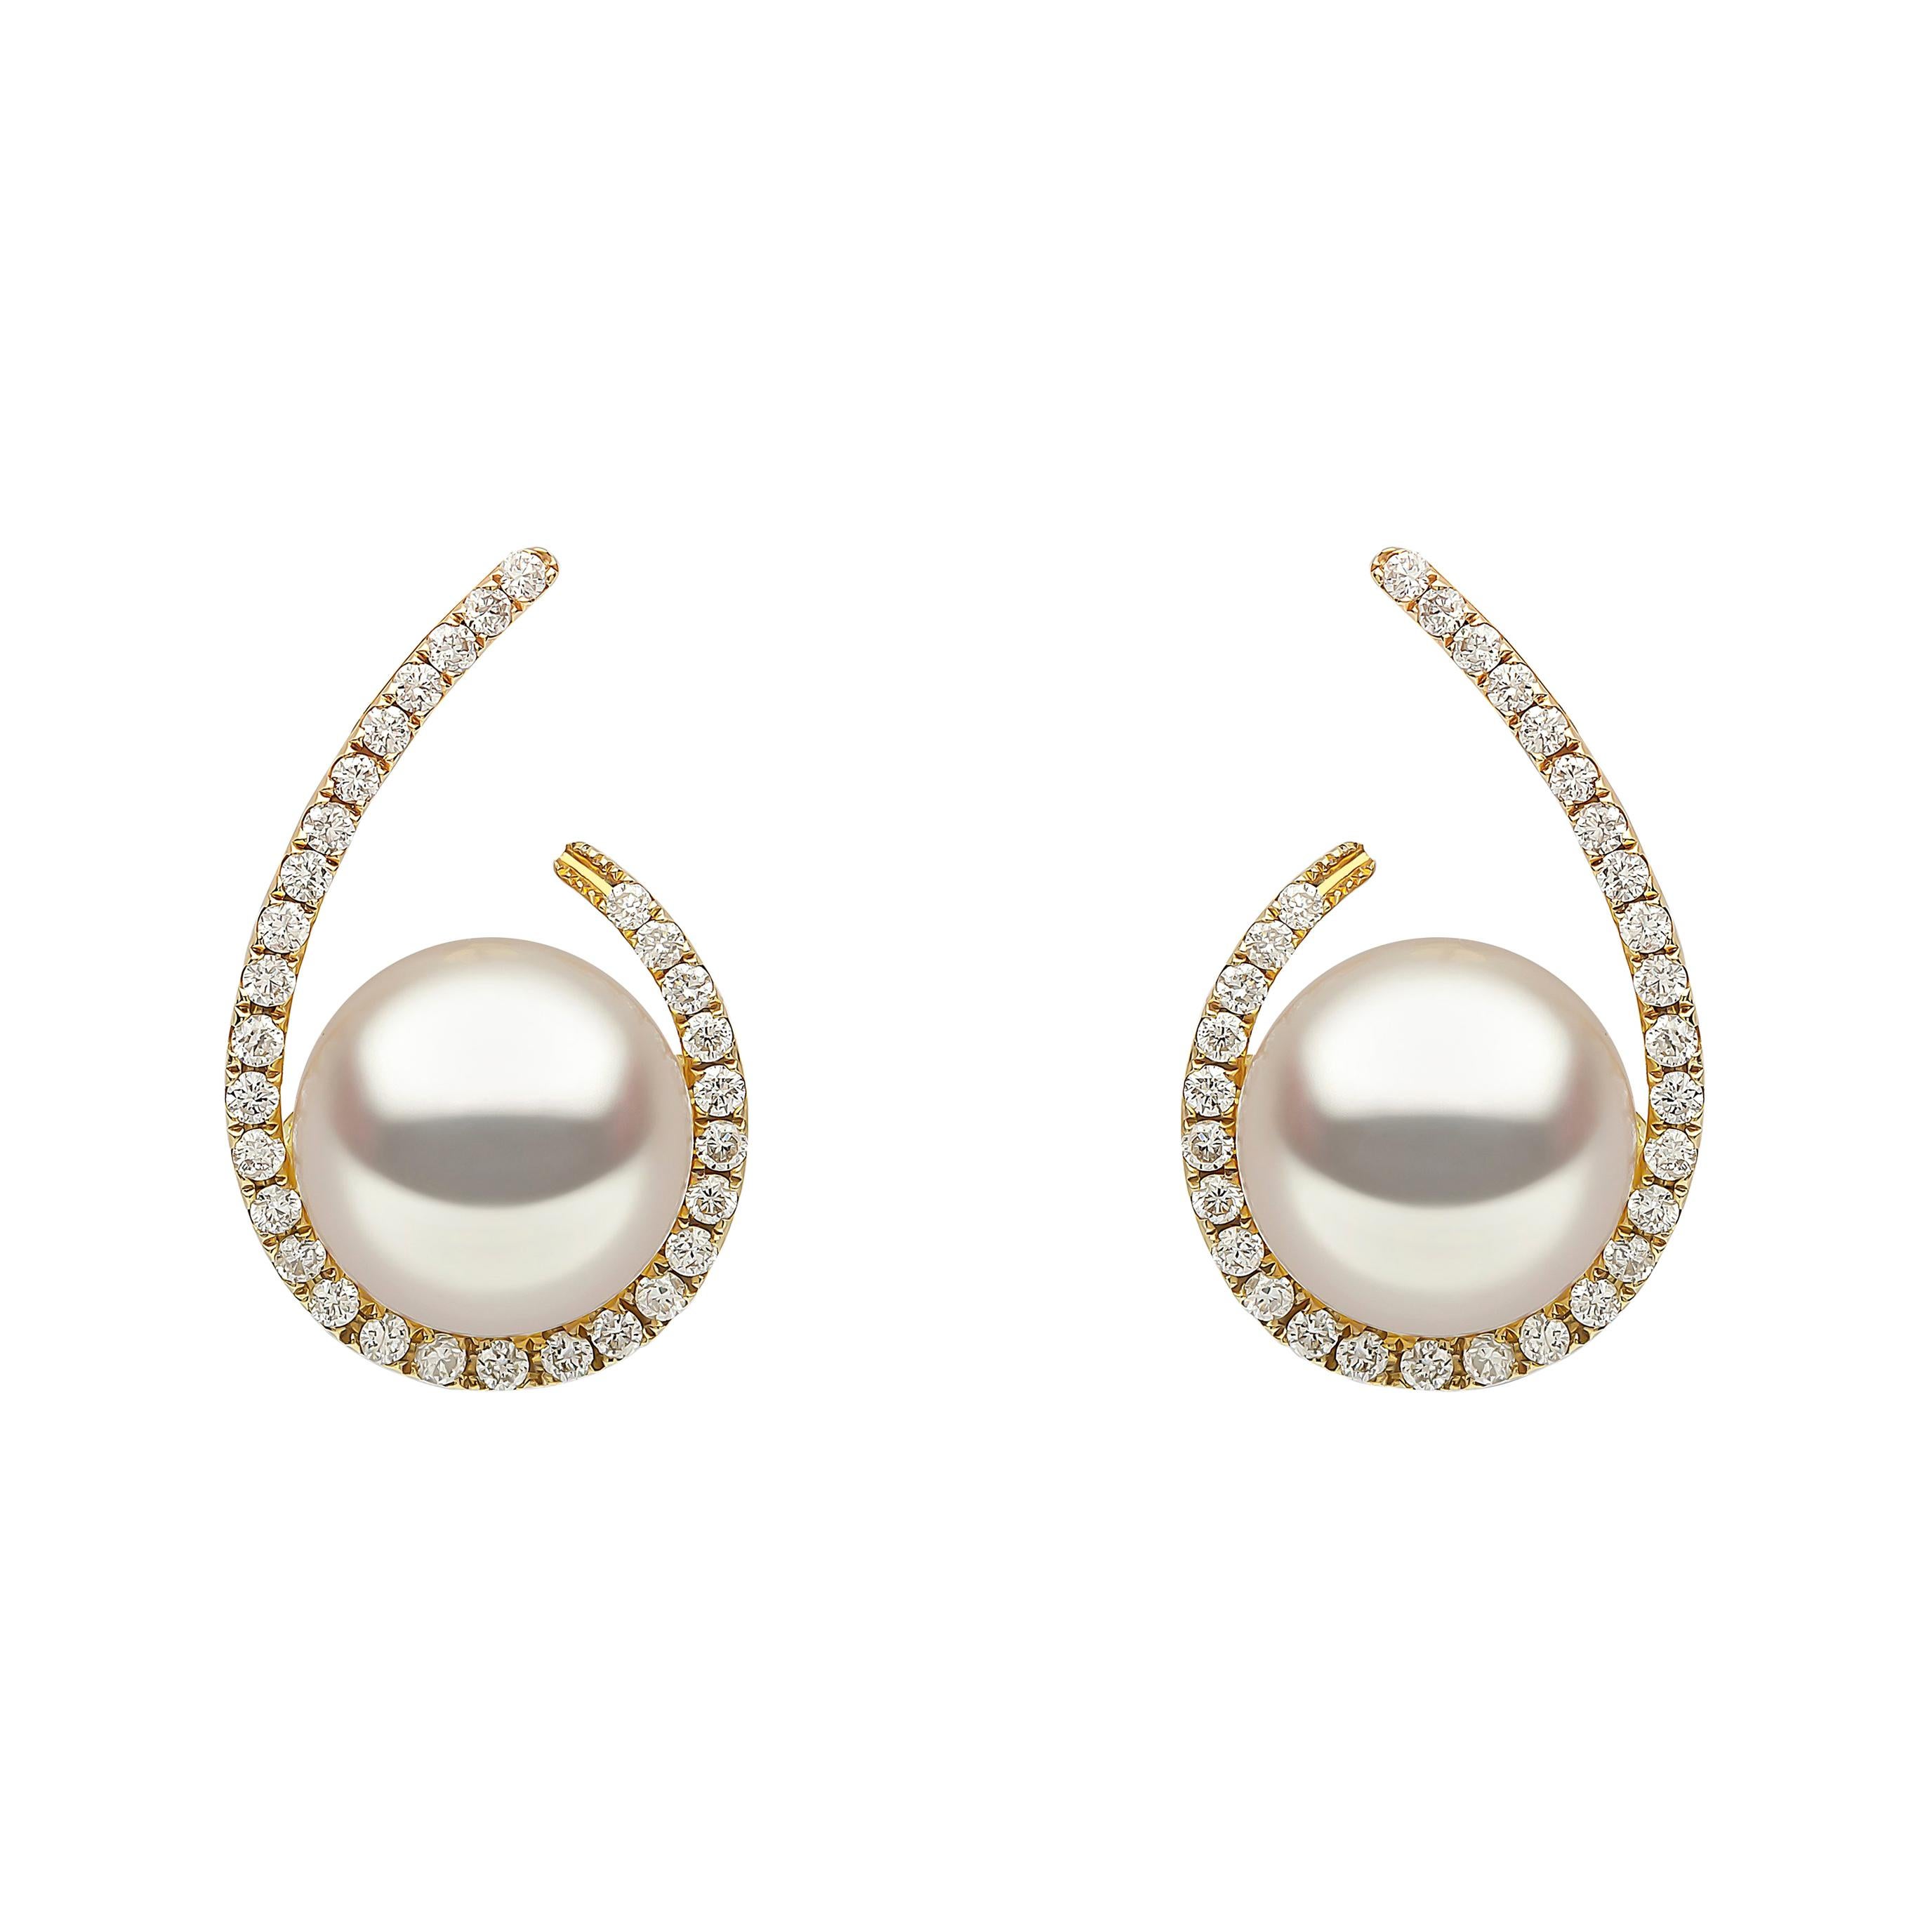 Yoko London Freshwater Pearl and Diamond Earrings Set in 18 Karat Yellow Gold